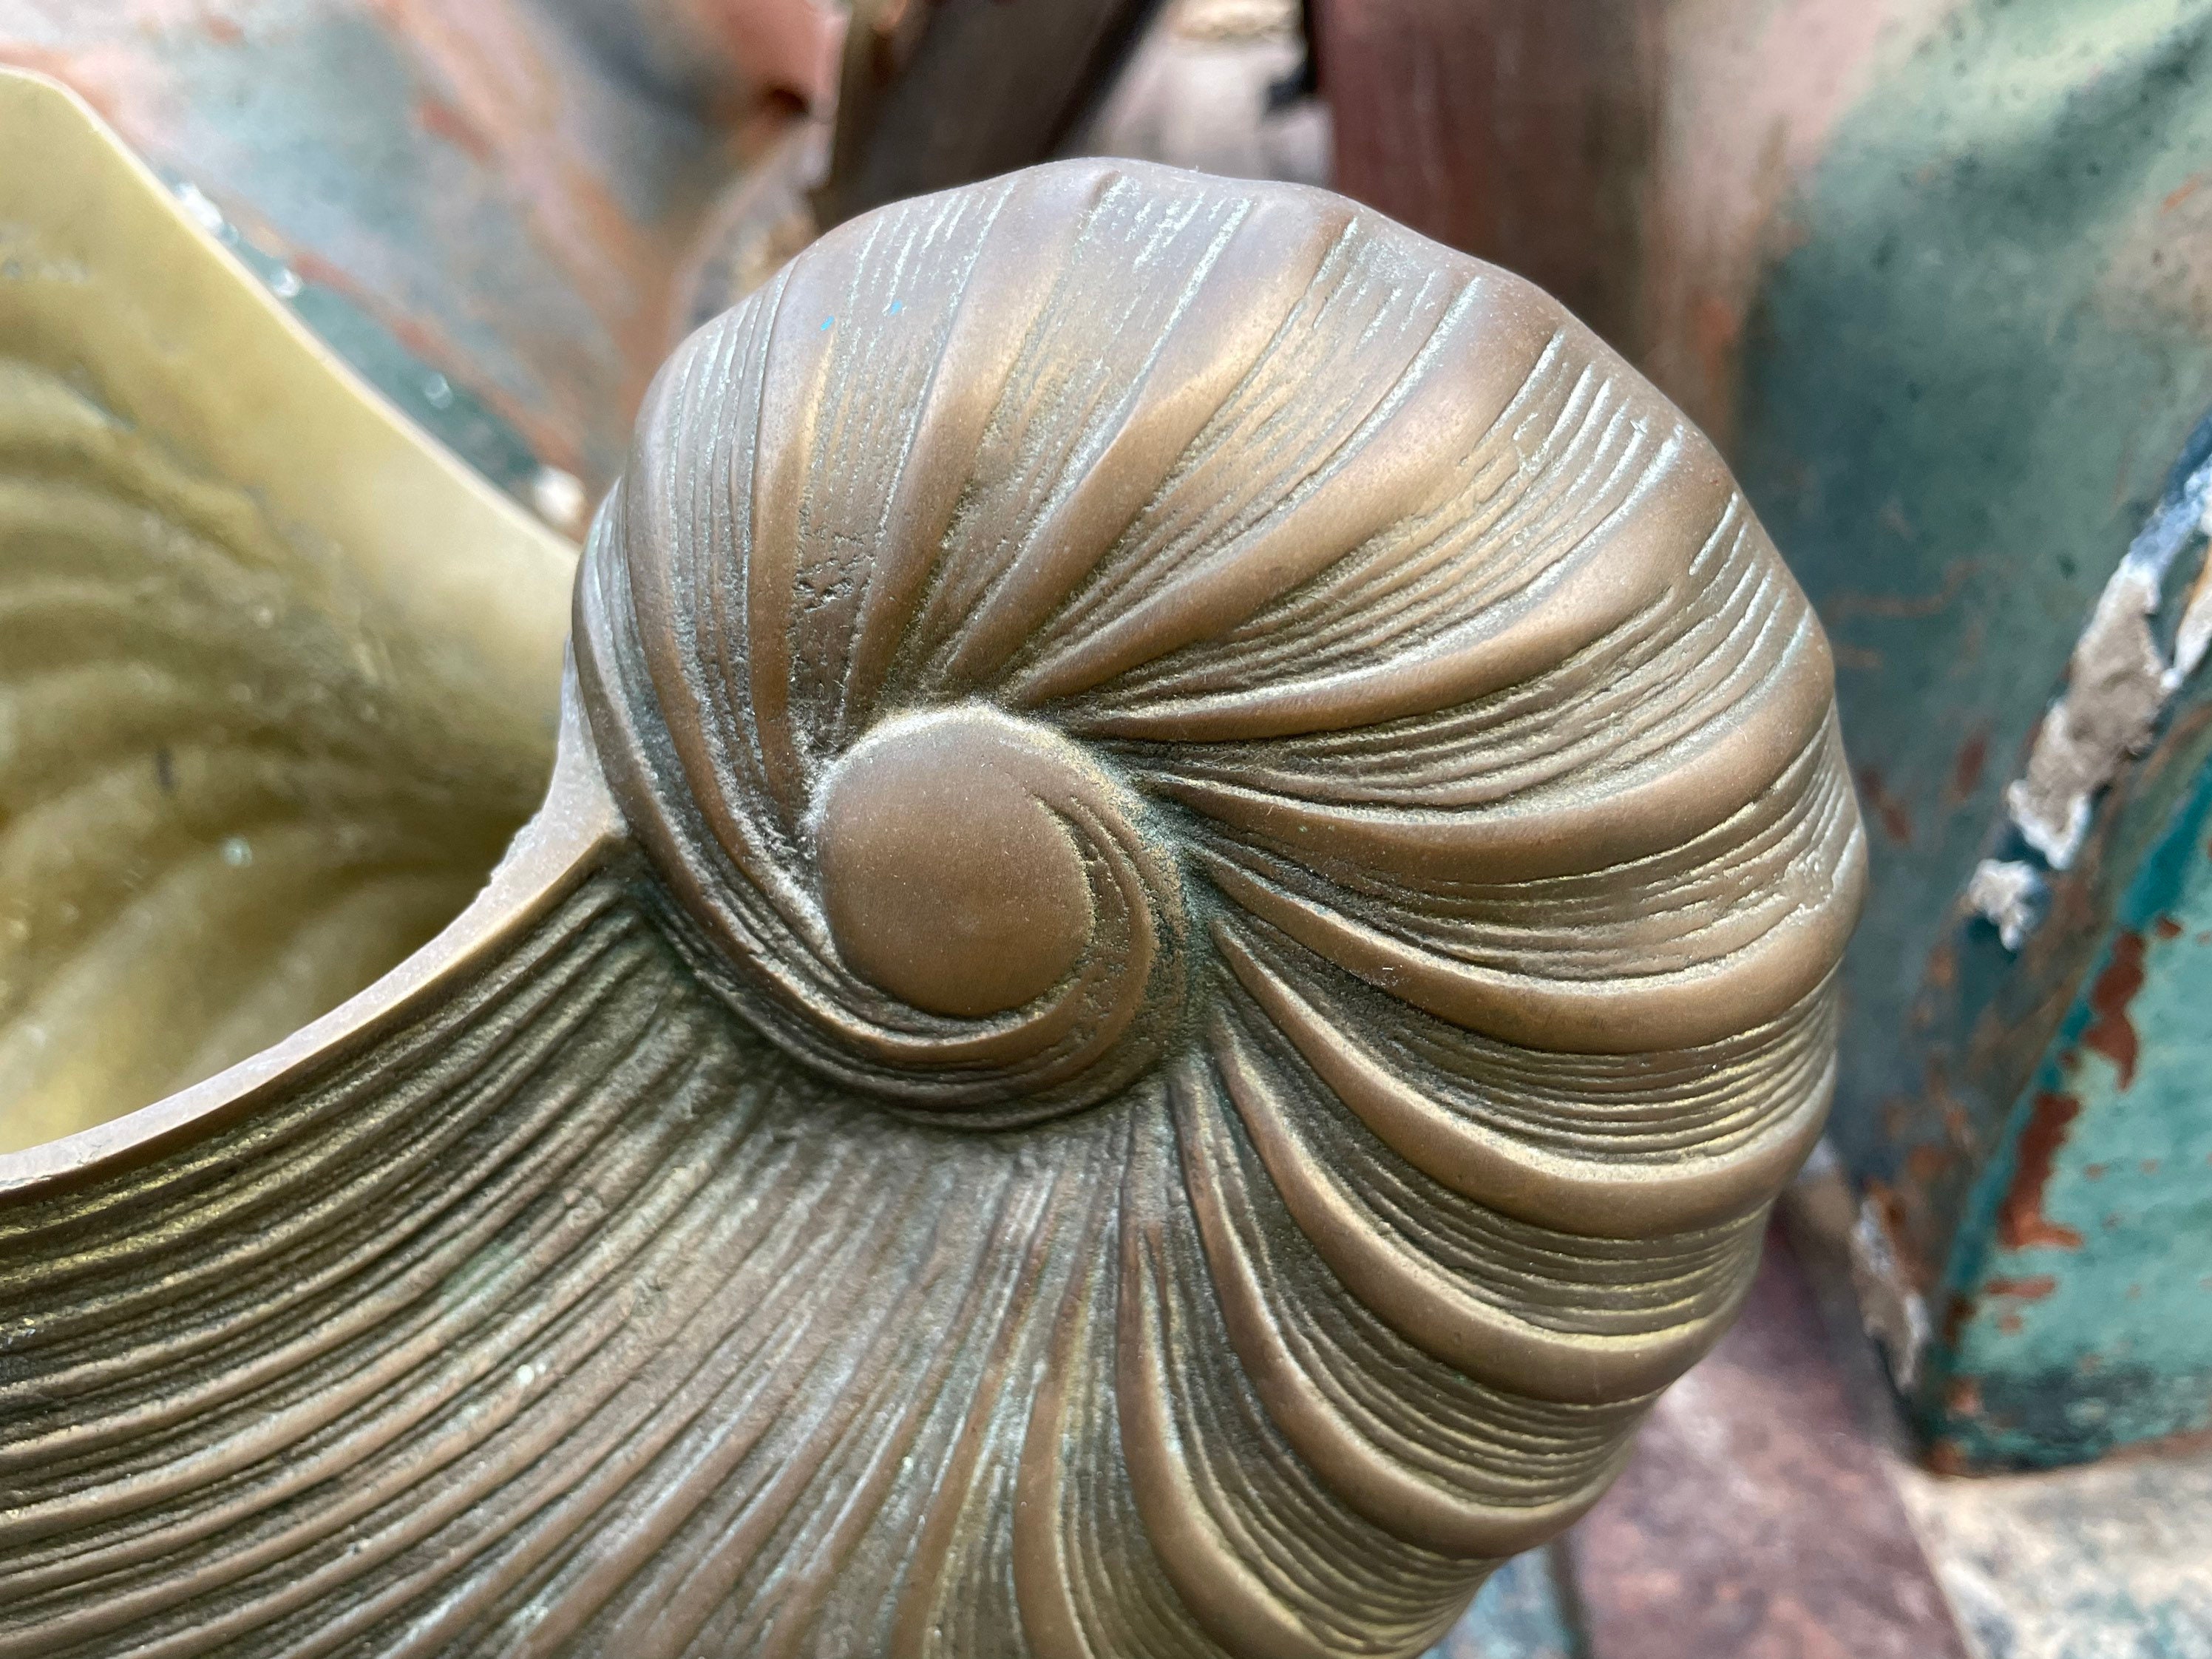 Brass Nautilus Seashell Planter Cachepot with Shell Feet, Large Wedding  Centerpiece Jardiniere